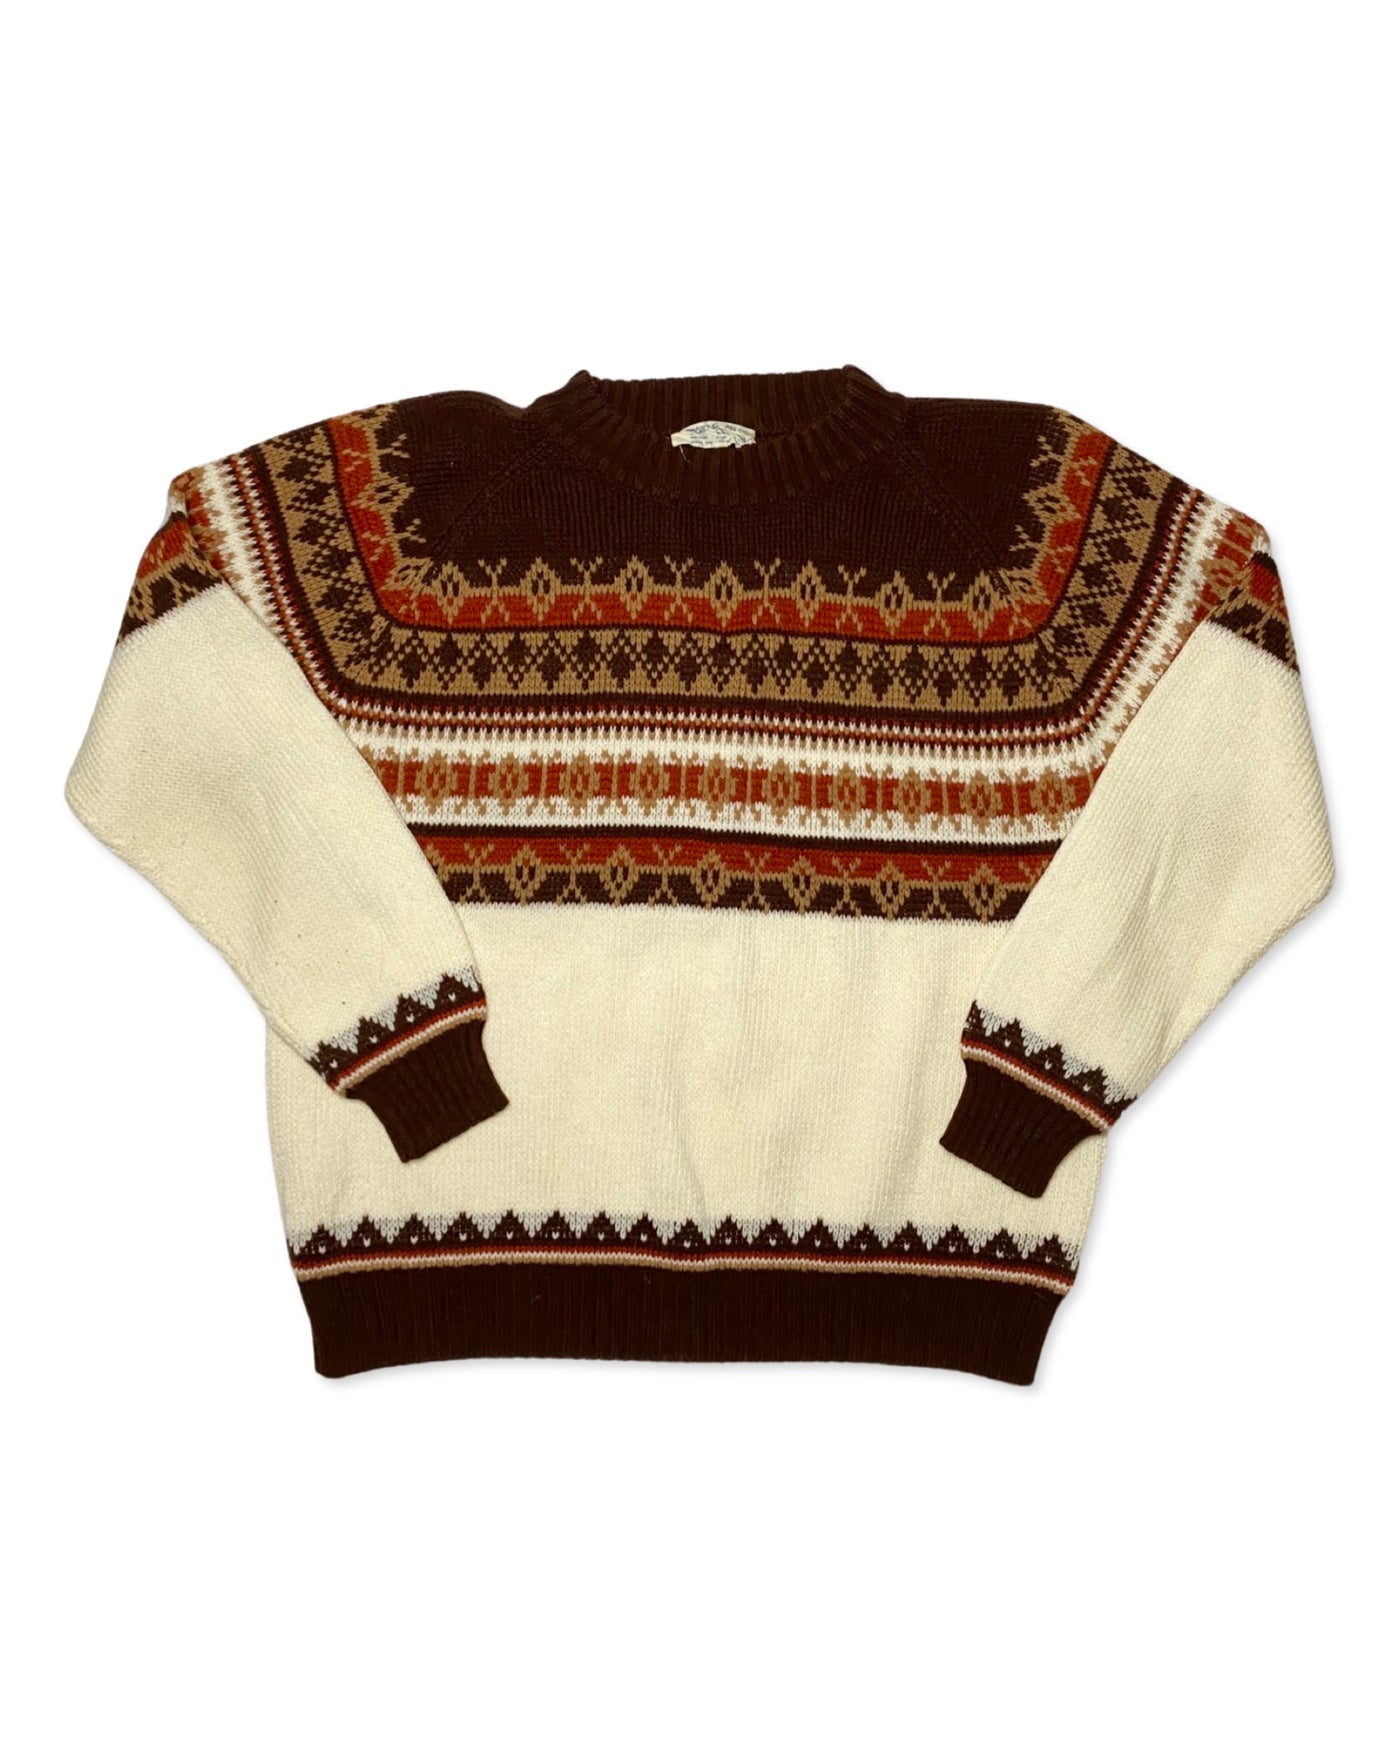 Vintage 80s 100% Acrylic Knit Sweater